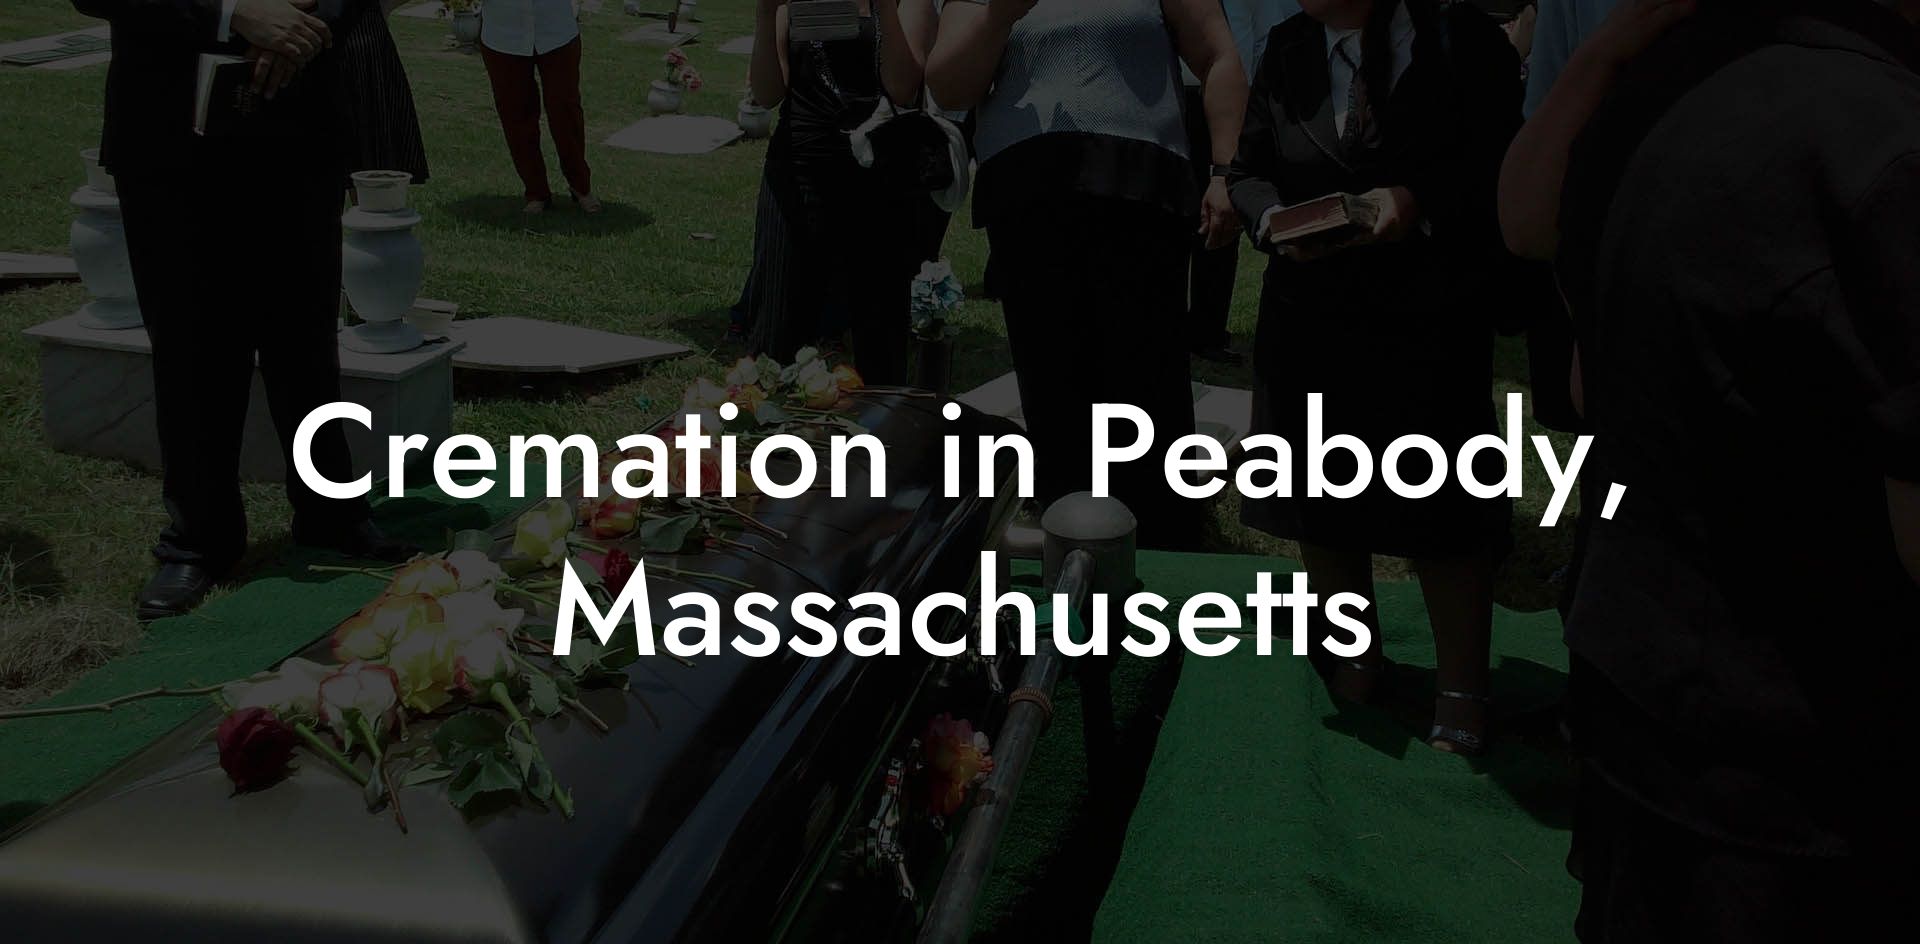 Cremation in Peabody, Massachusetts